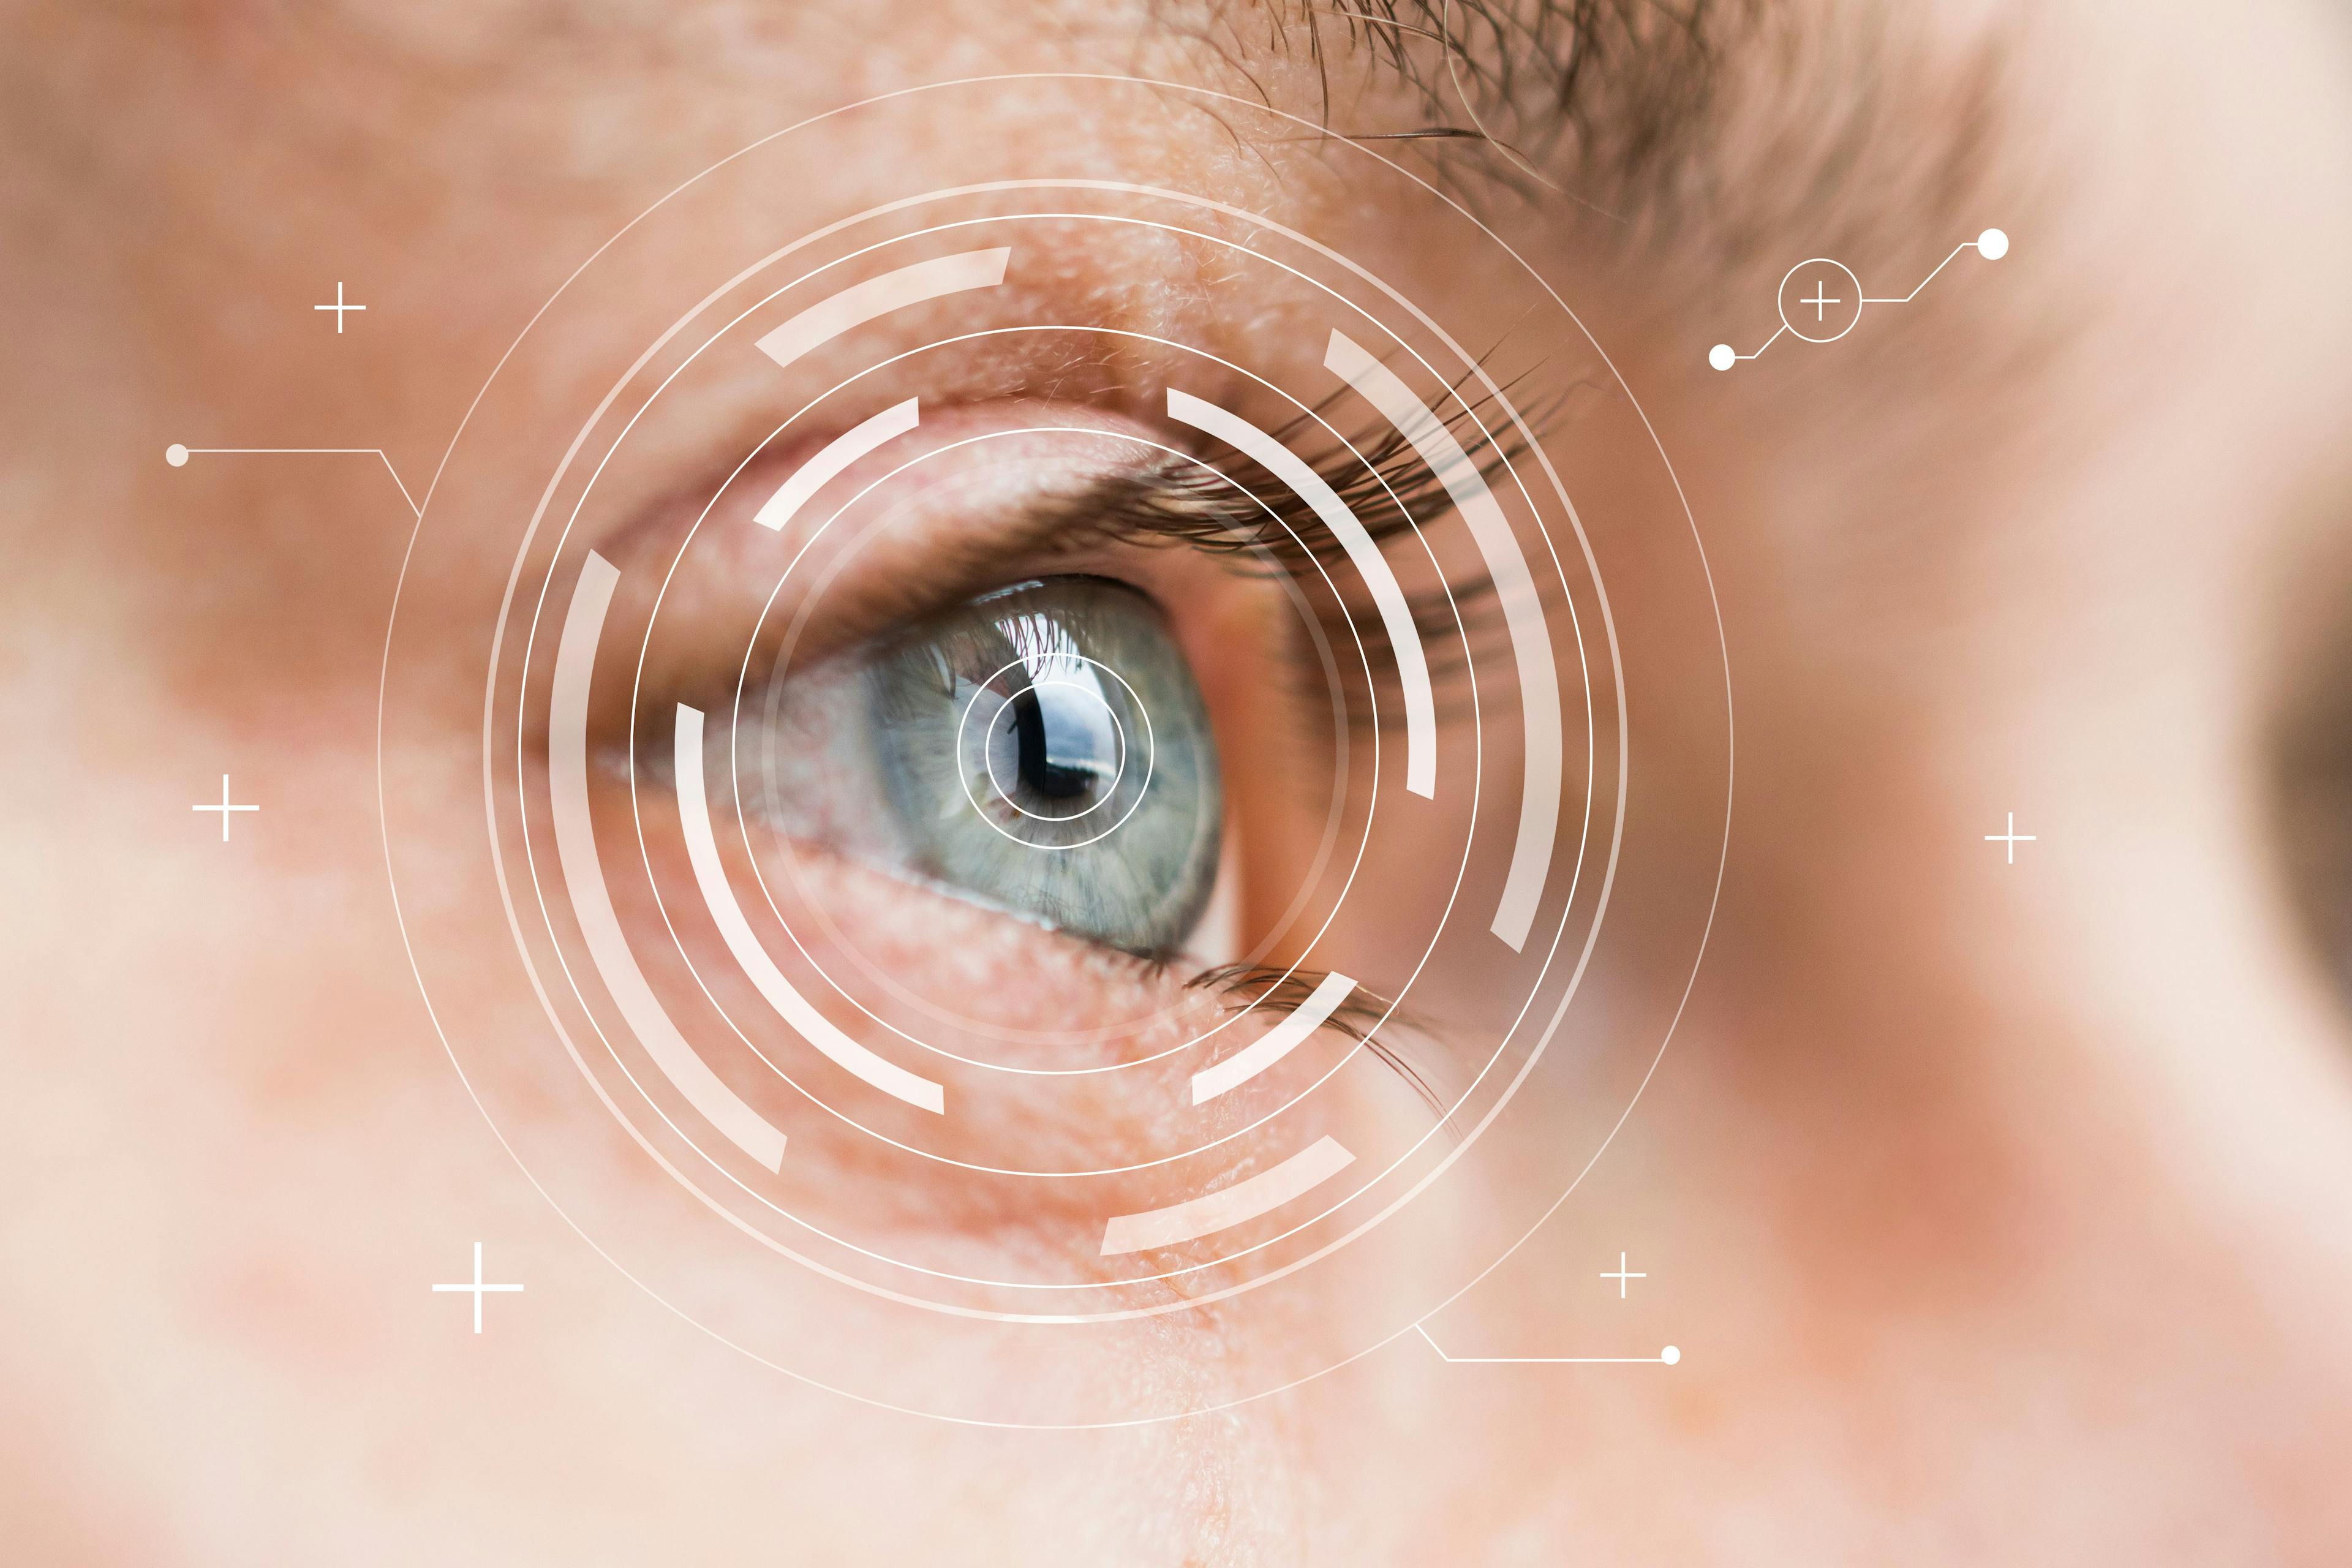 Eye monitoring and treatment in medical | Image Credit: maxsim - stock.adobe.com